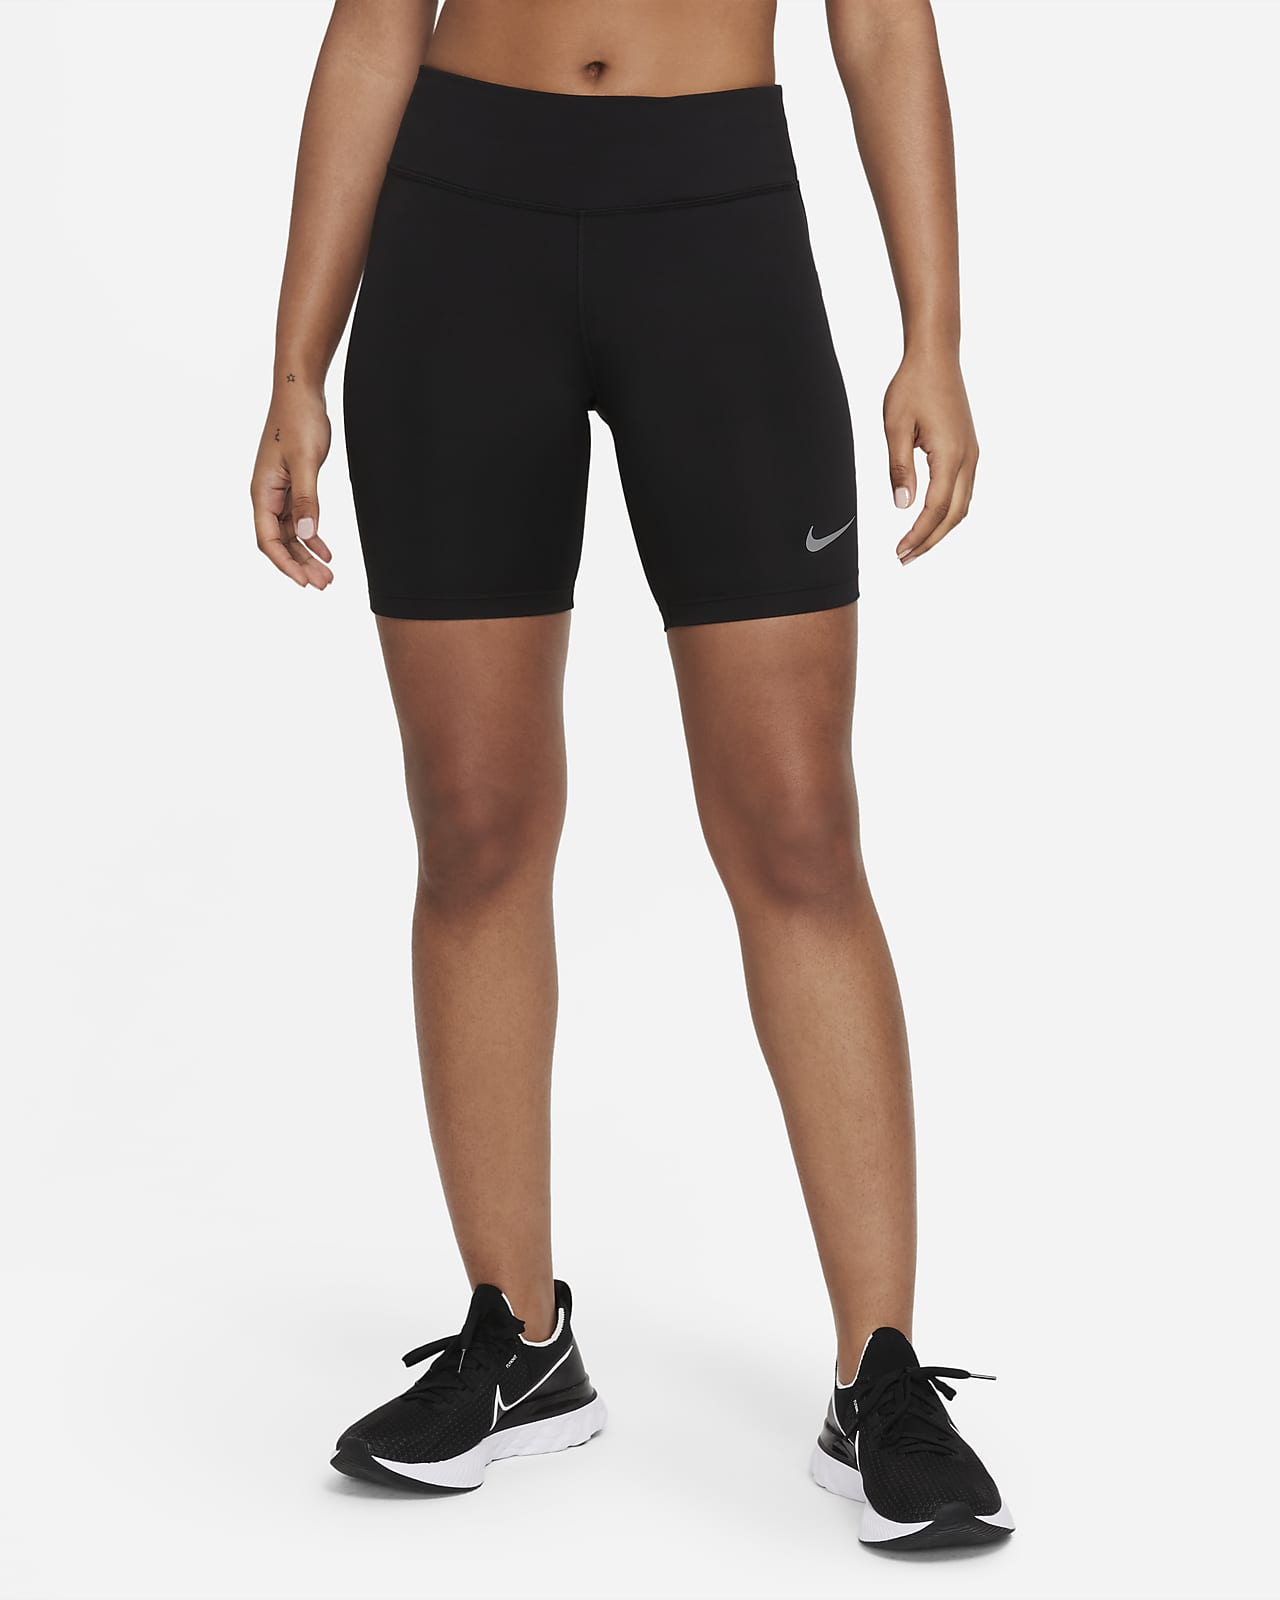 Nike Fast Women's Running Shorts